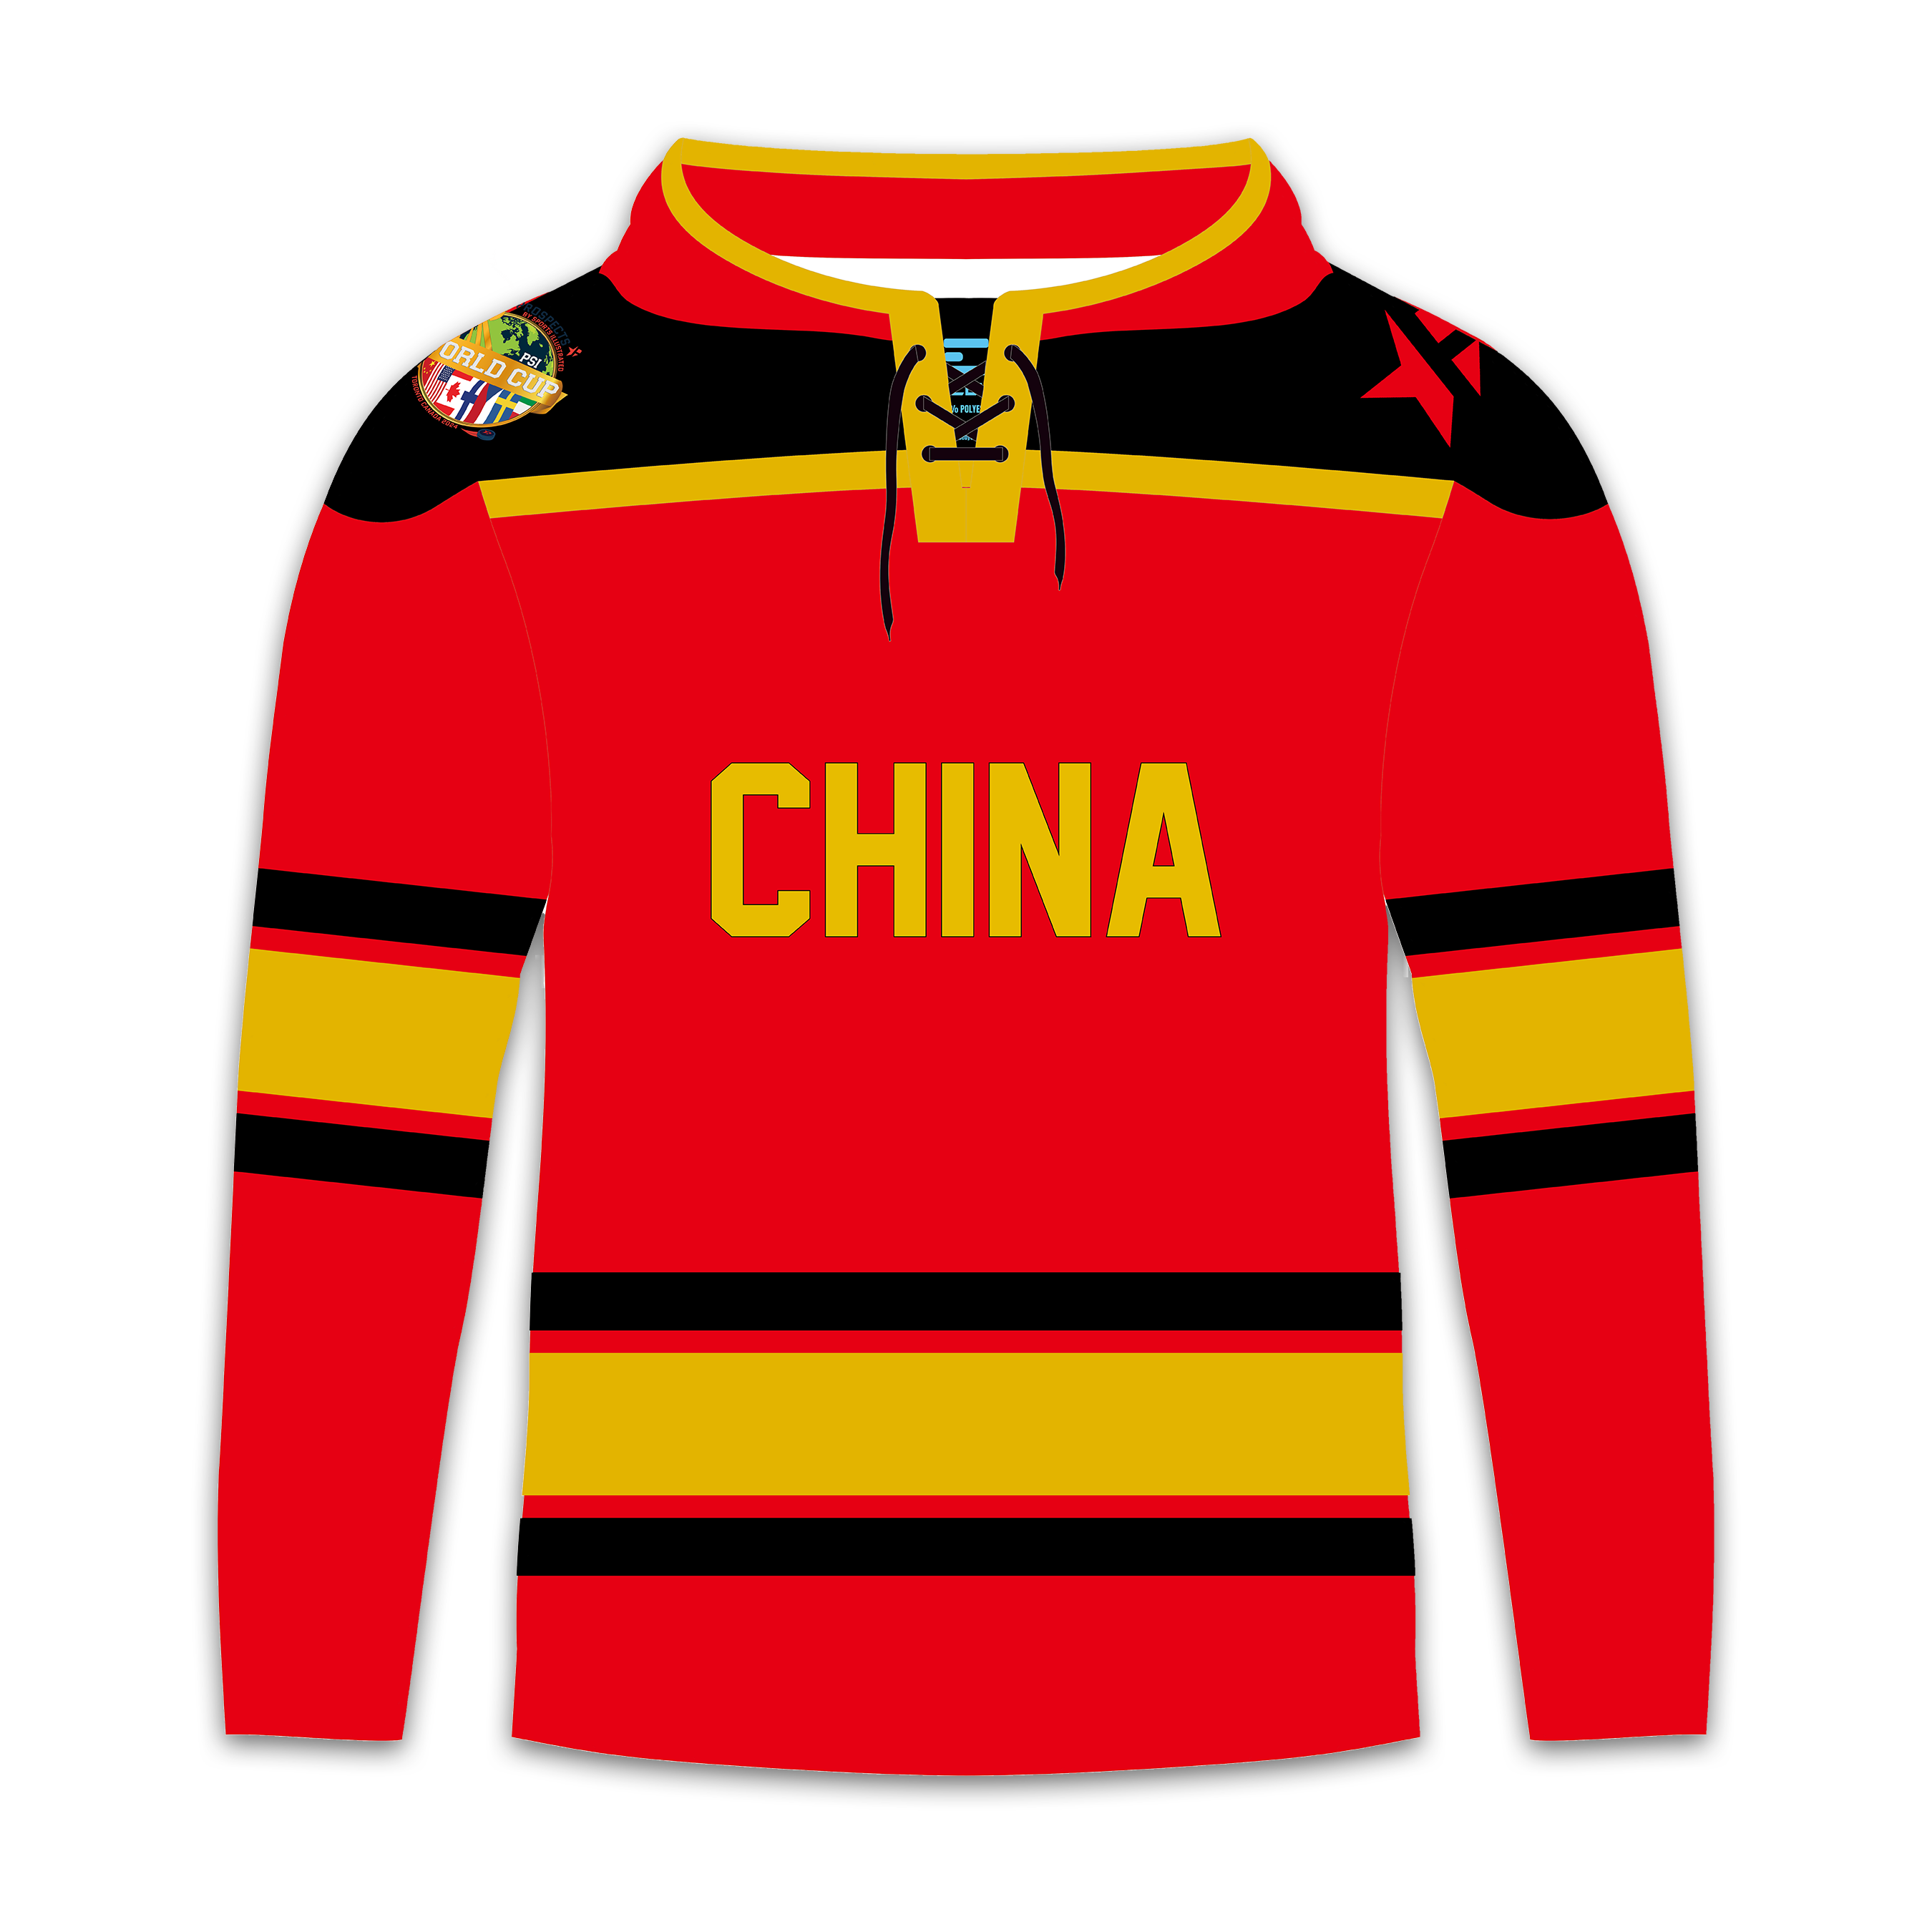 China World Cup Gold Bundle